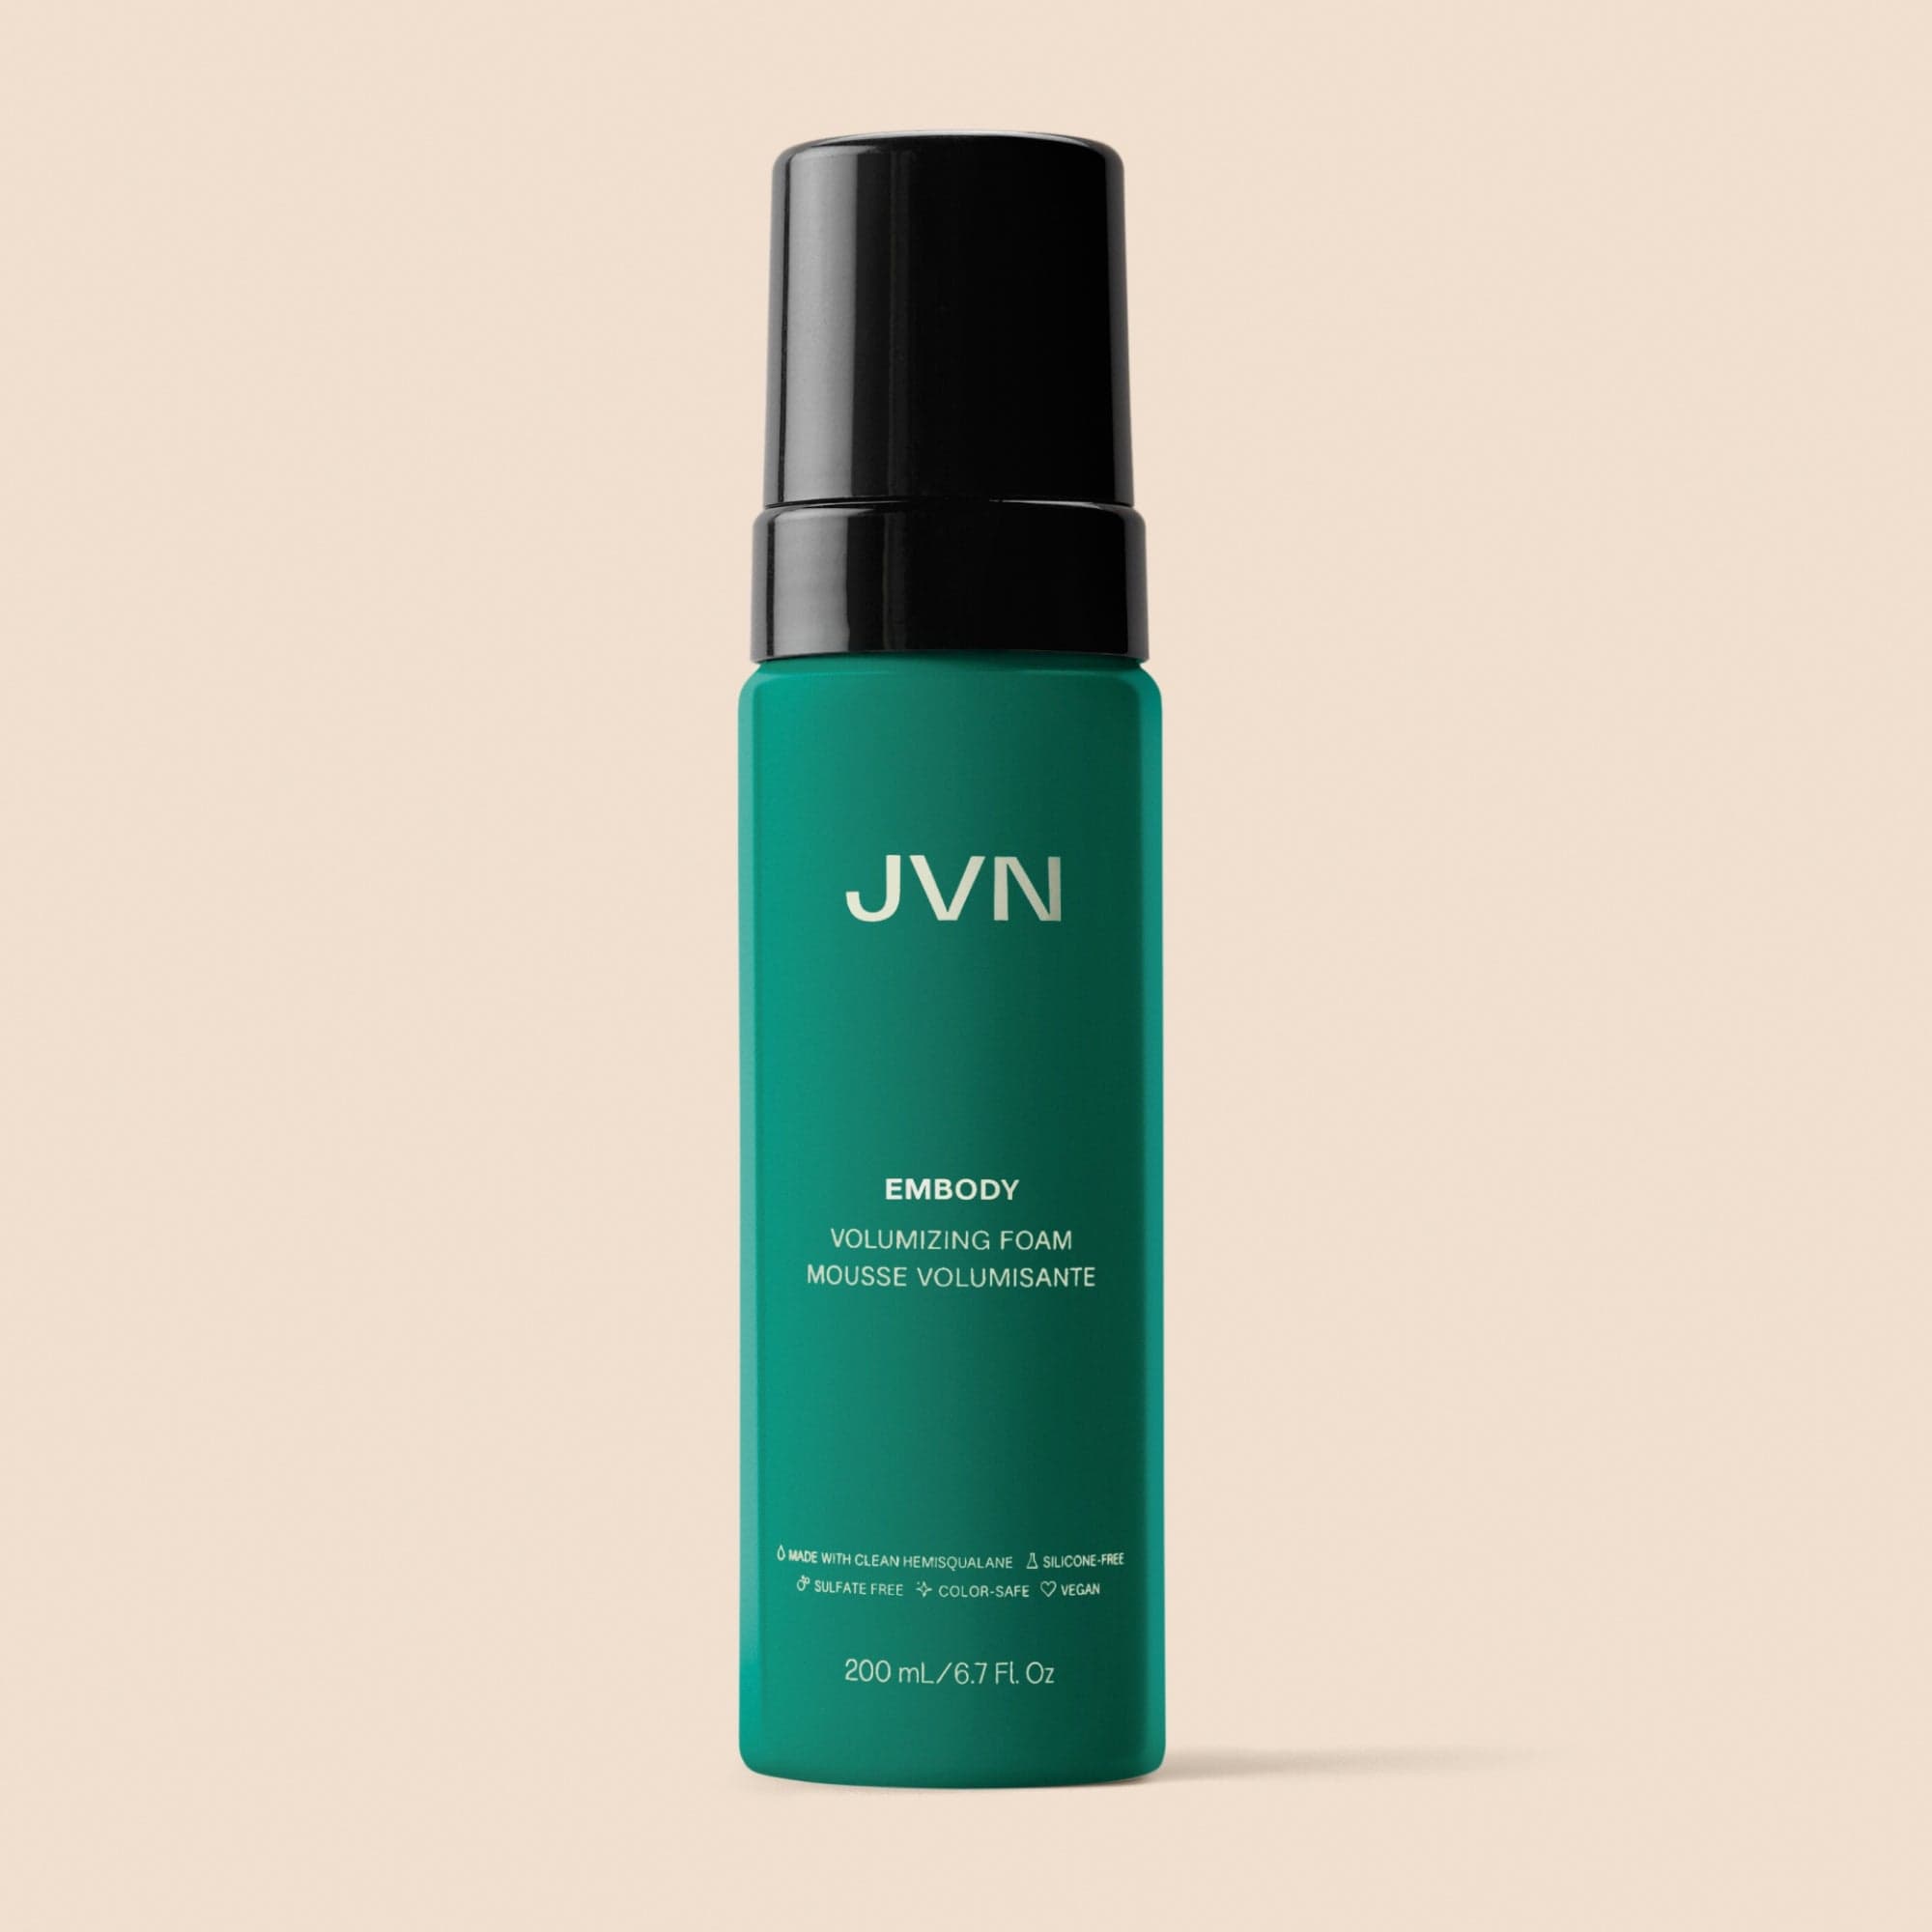 JVN Styler Embody Volumizing Foam sulfate-free silicone-free sustainable